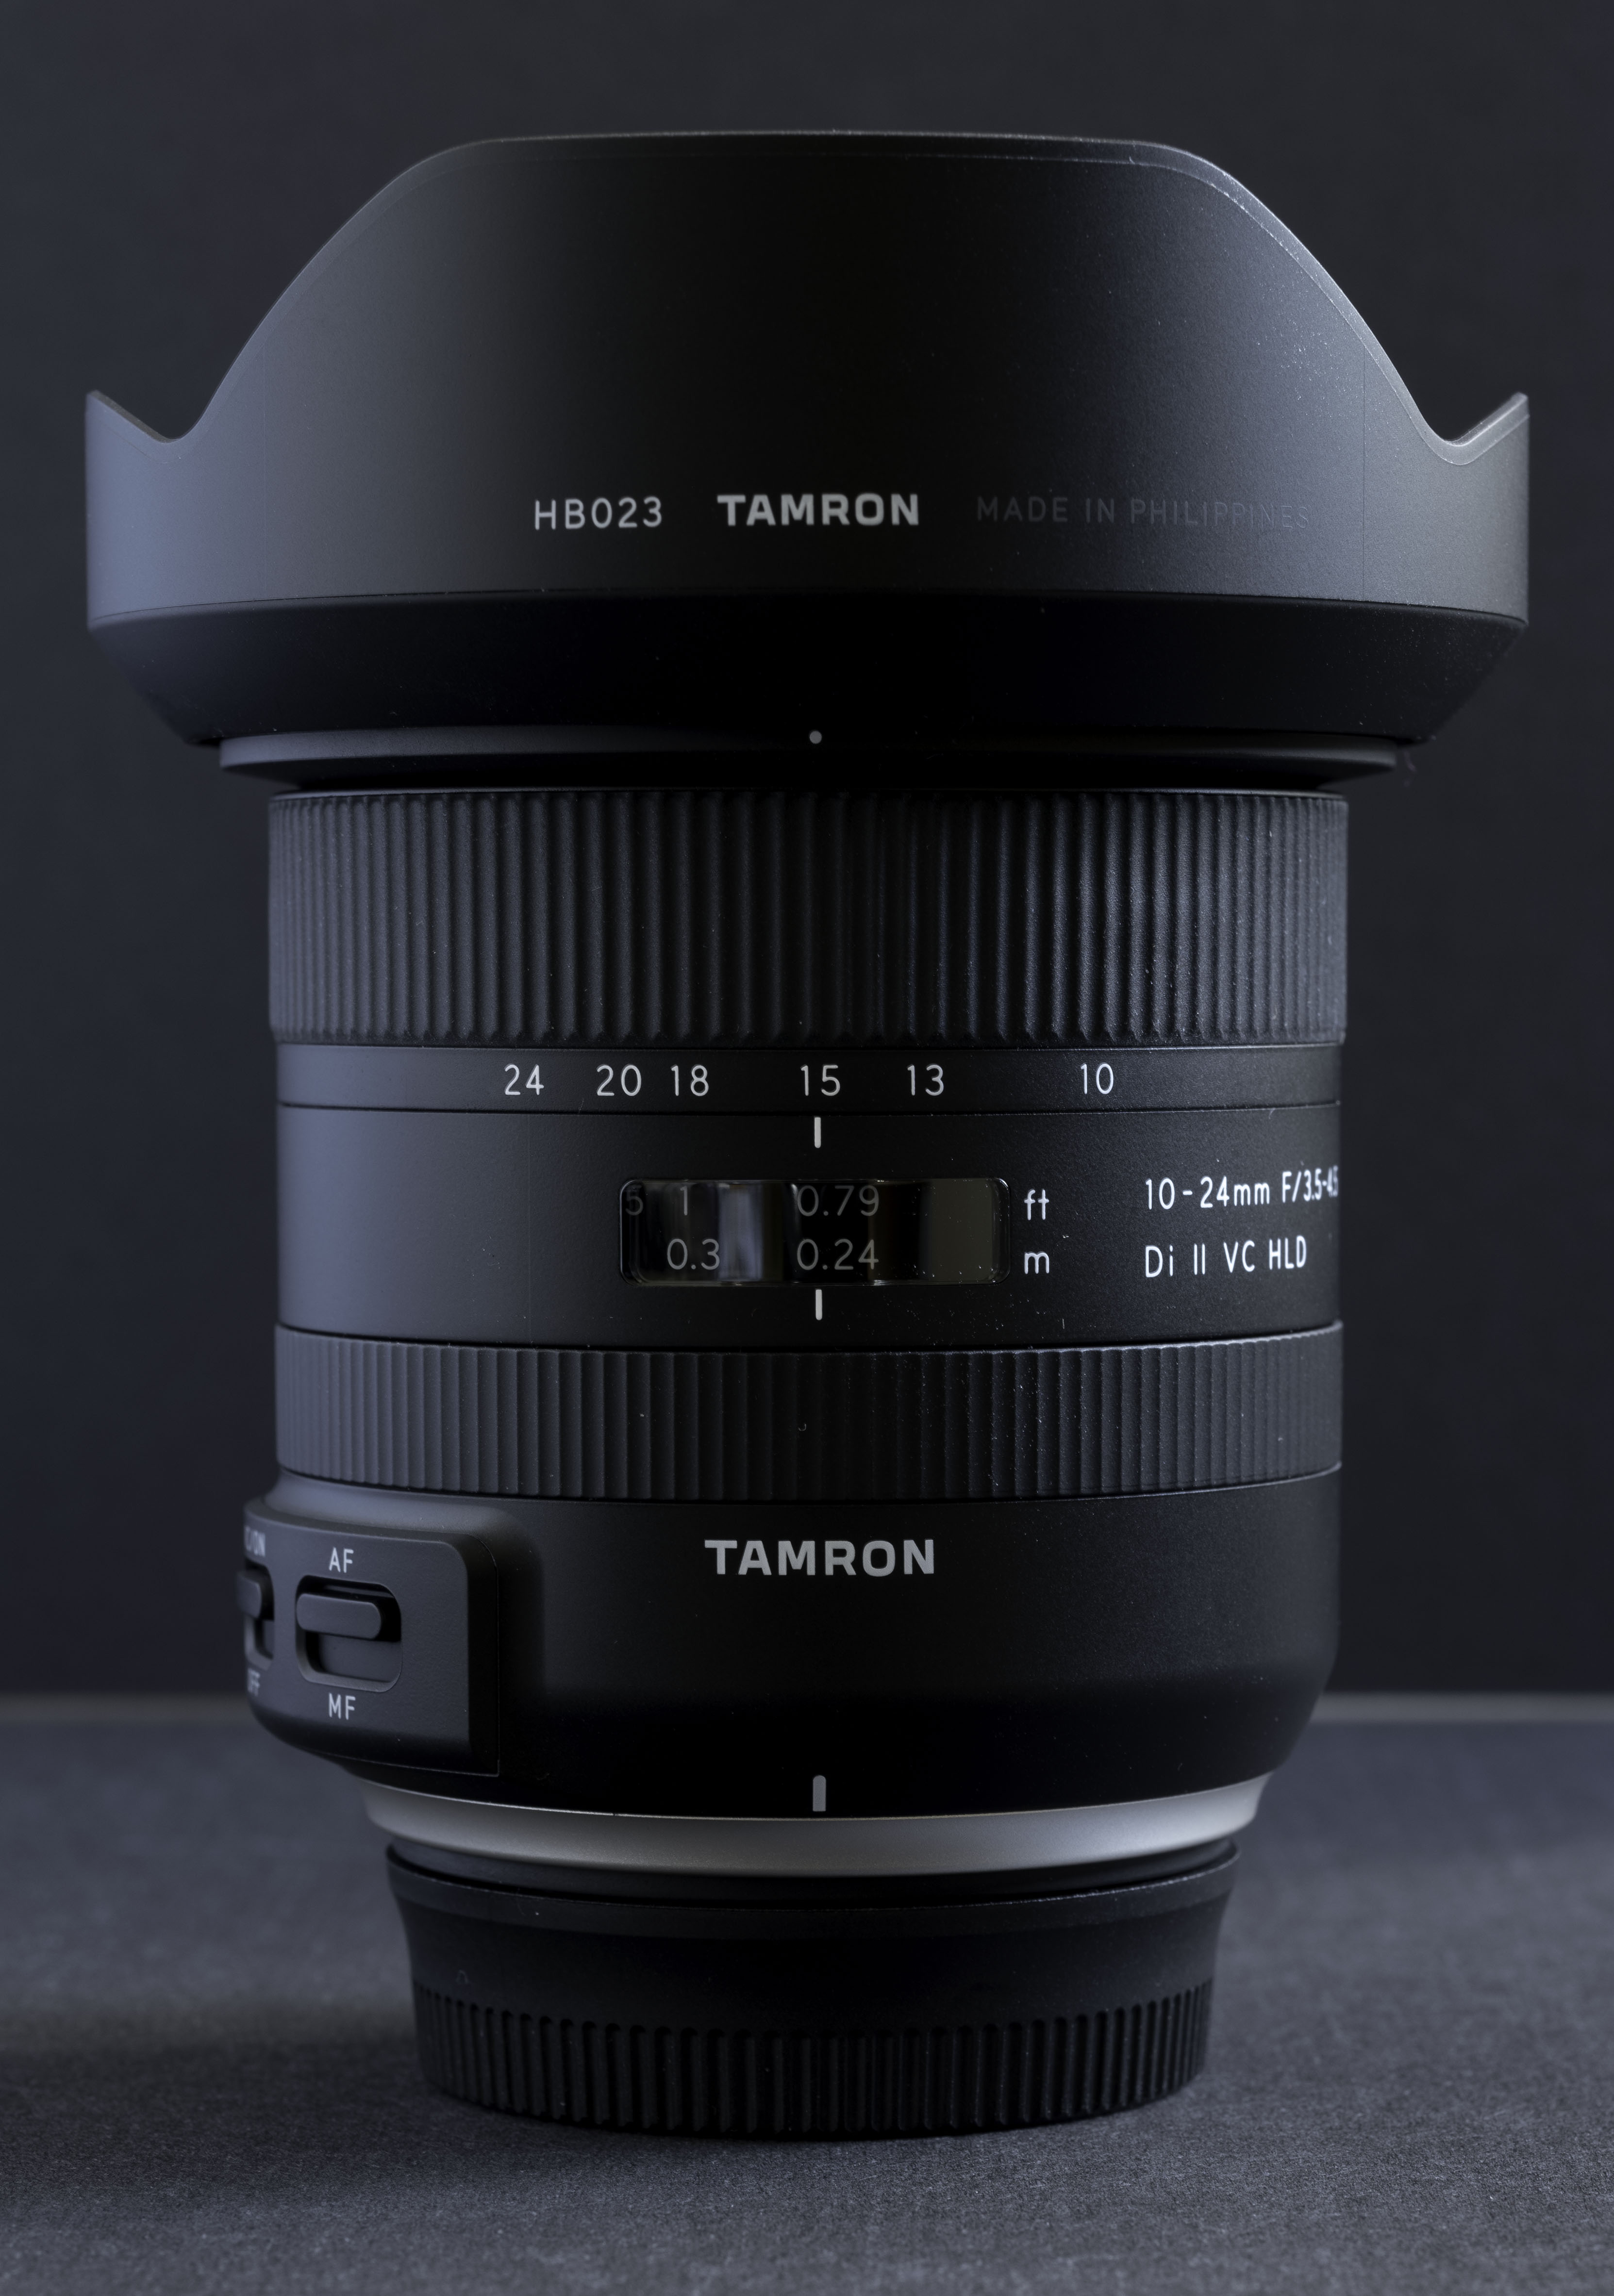 Tamron 10-24mm f/3.5-4.5 Di II VC HLD Review